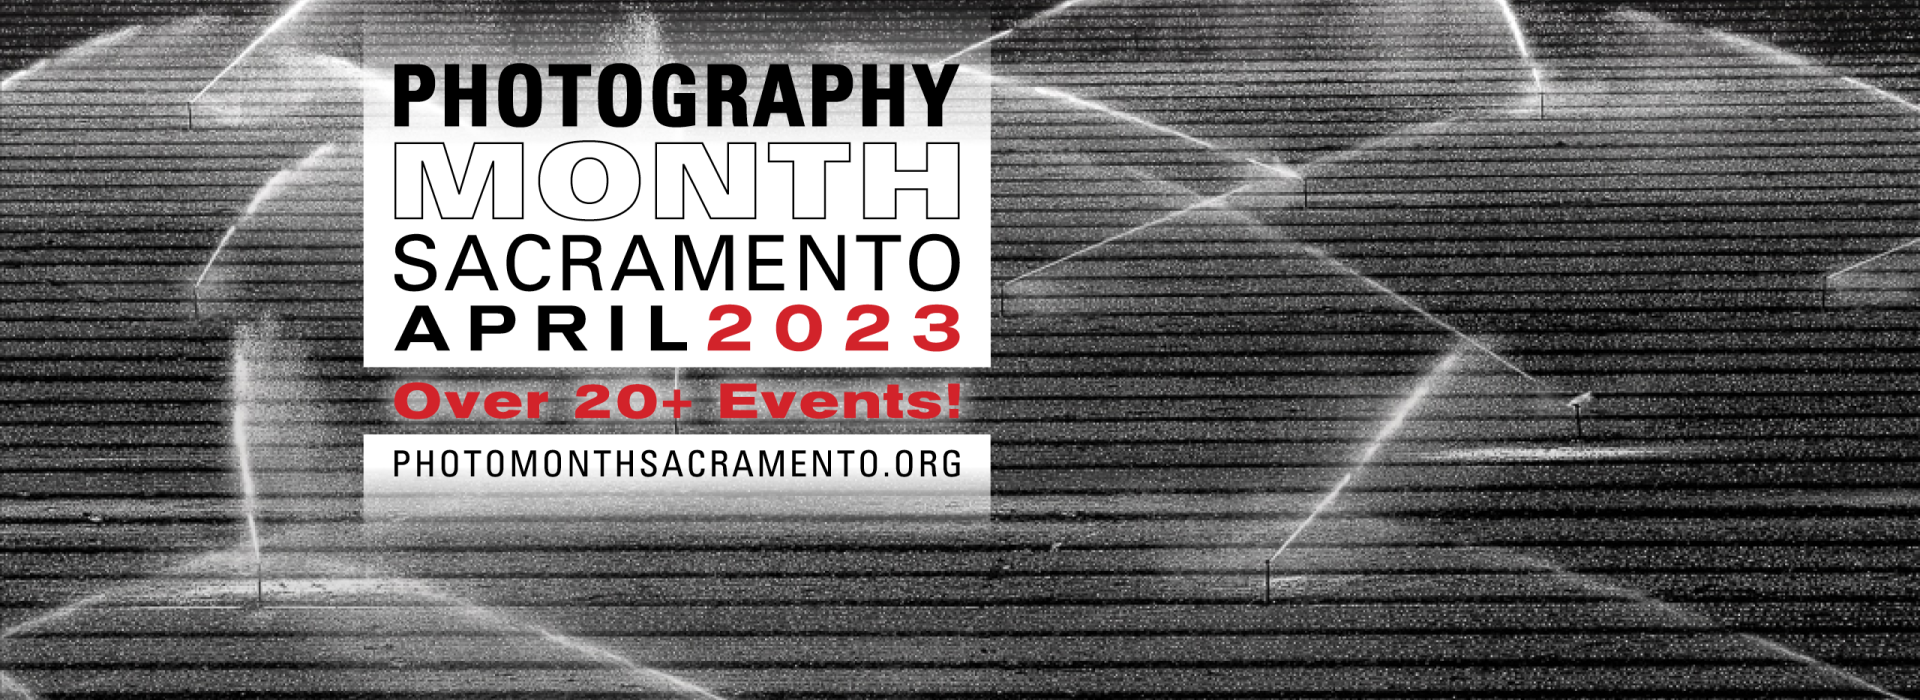 Photography Month Sacramento